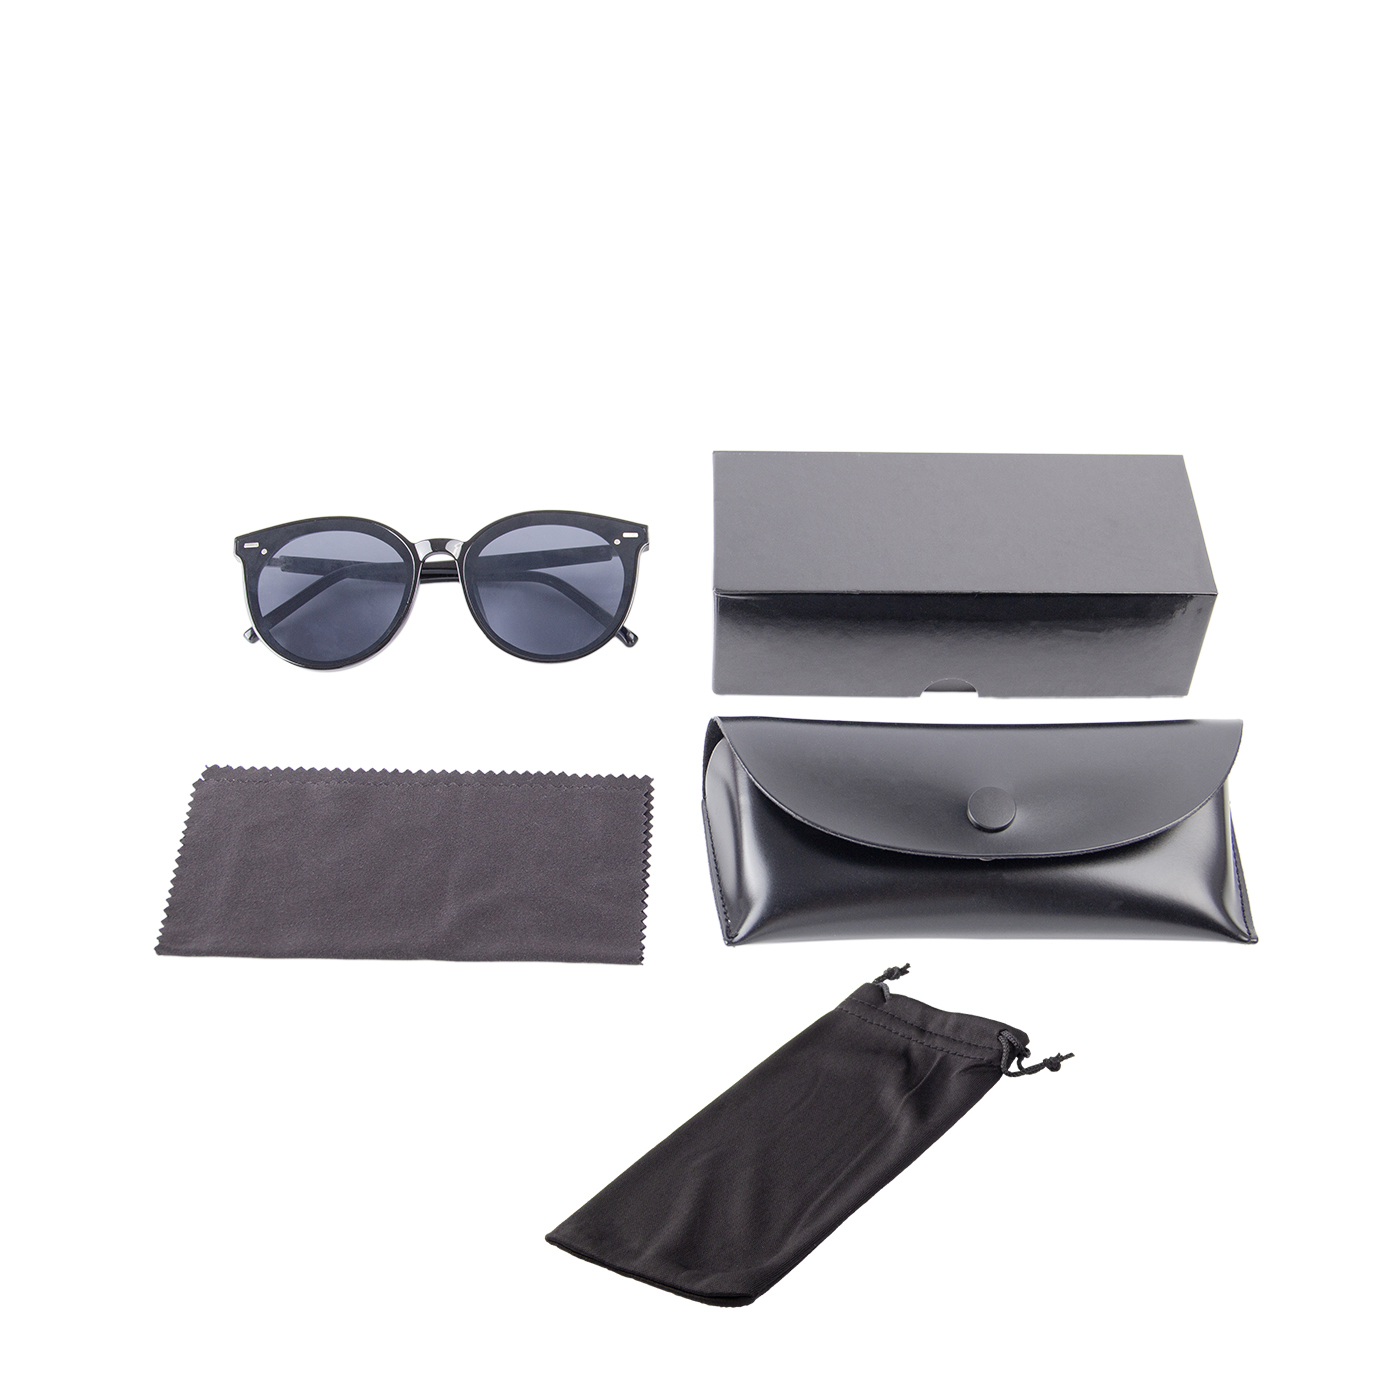 Custom Sunglasses With Case Set1